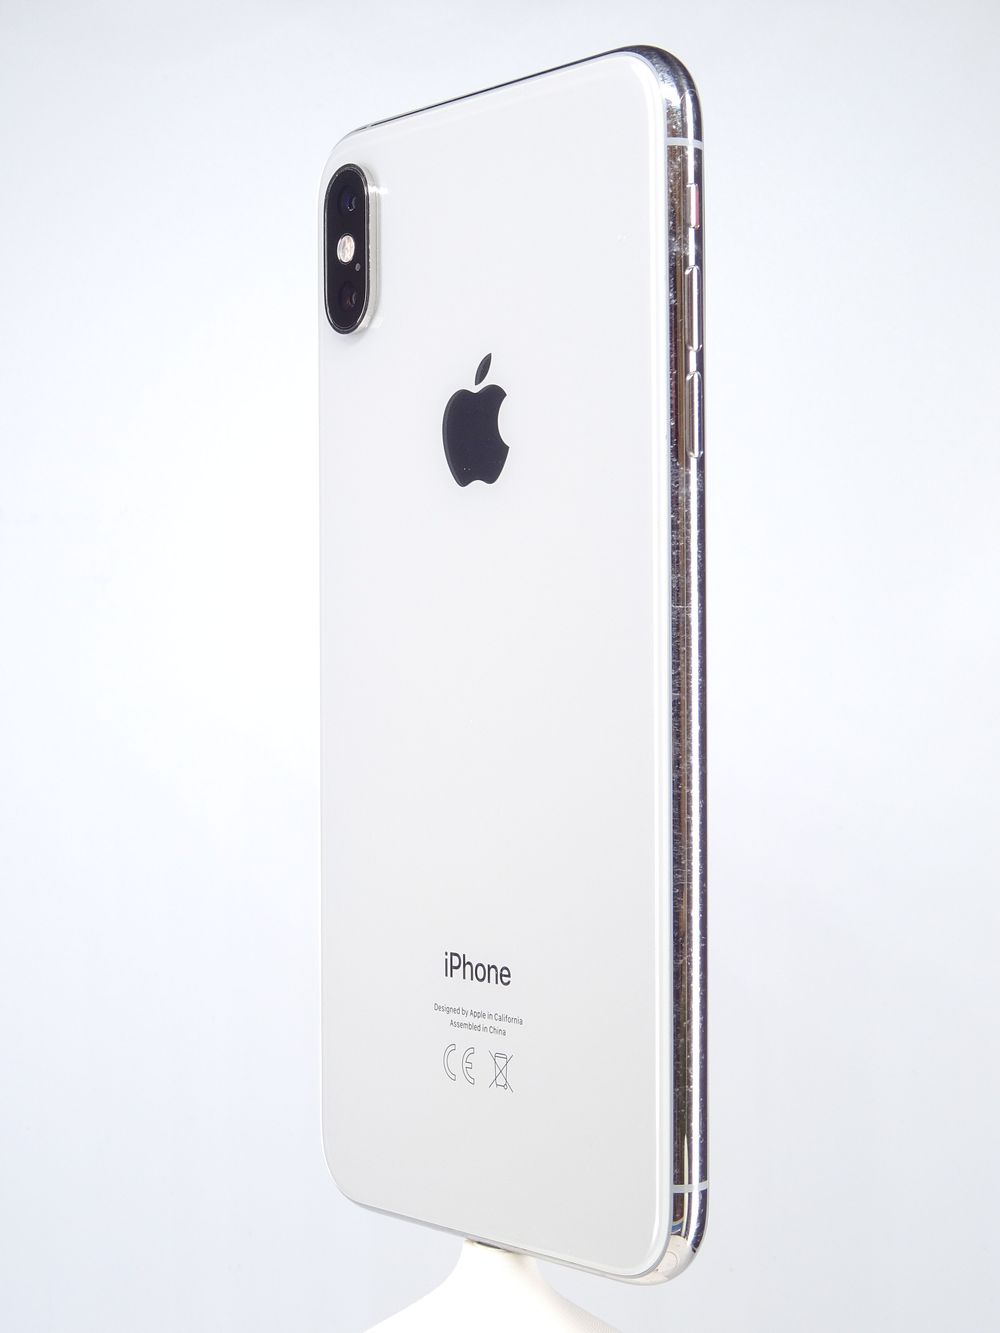 Telefon mobil Apple iPhone XS Max, Silver, 256 GB,  Foarte Bun